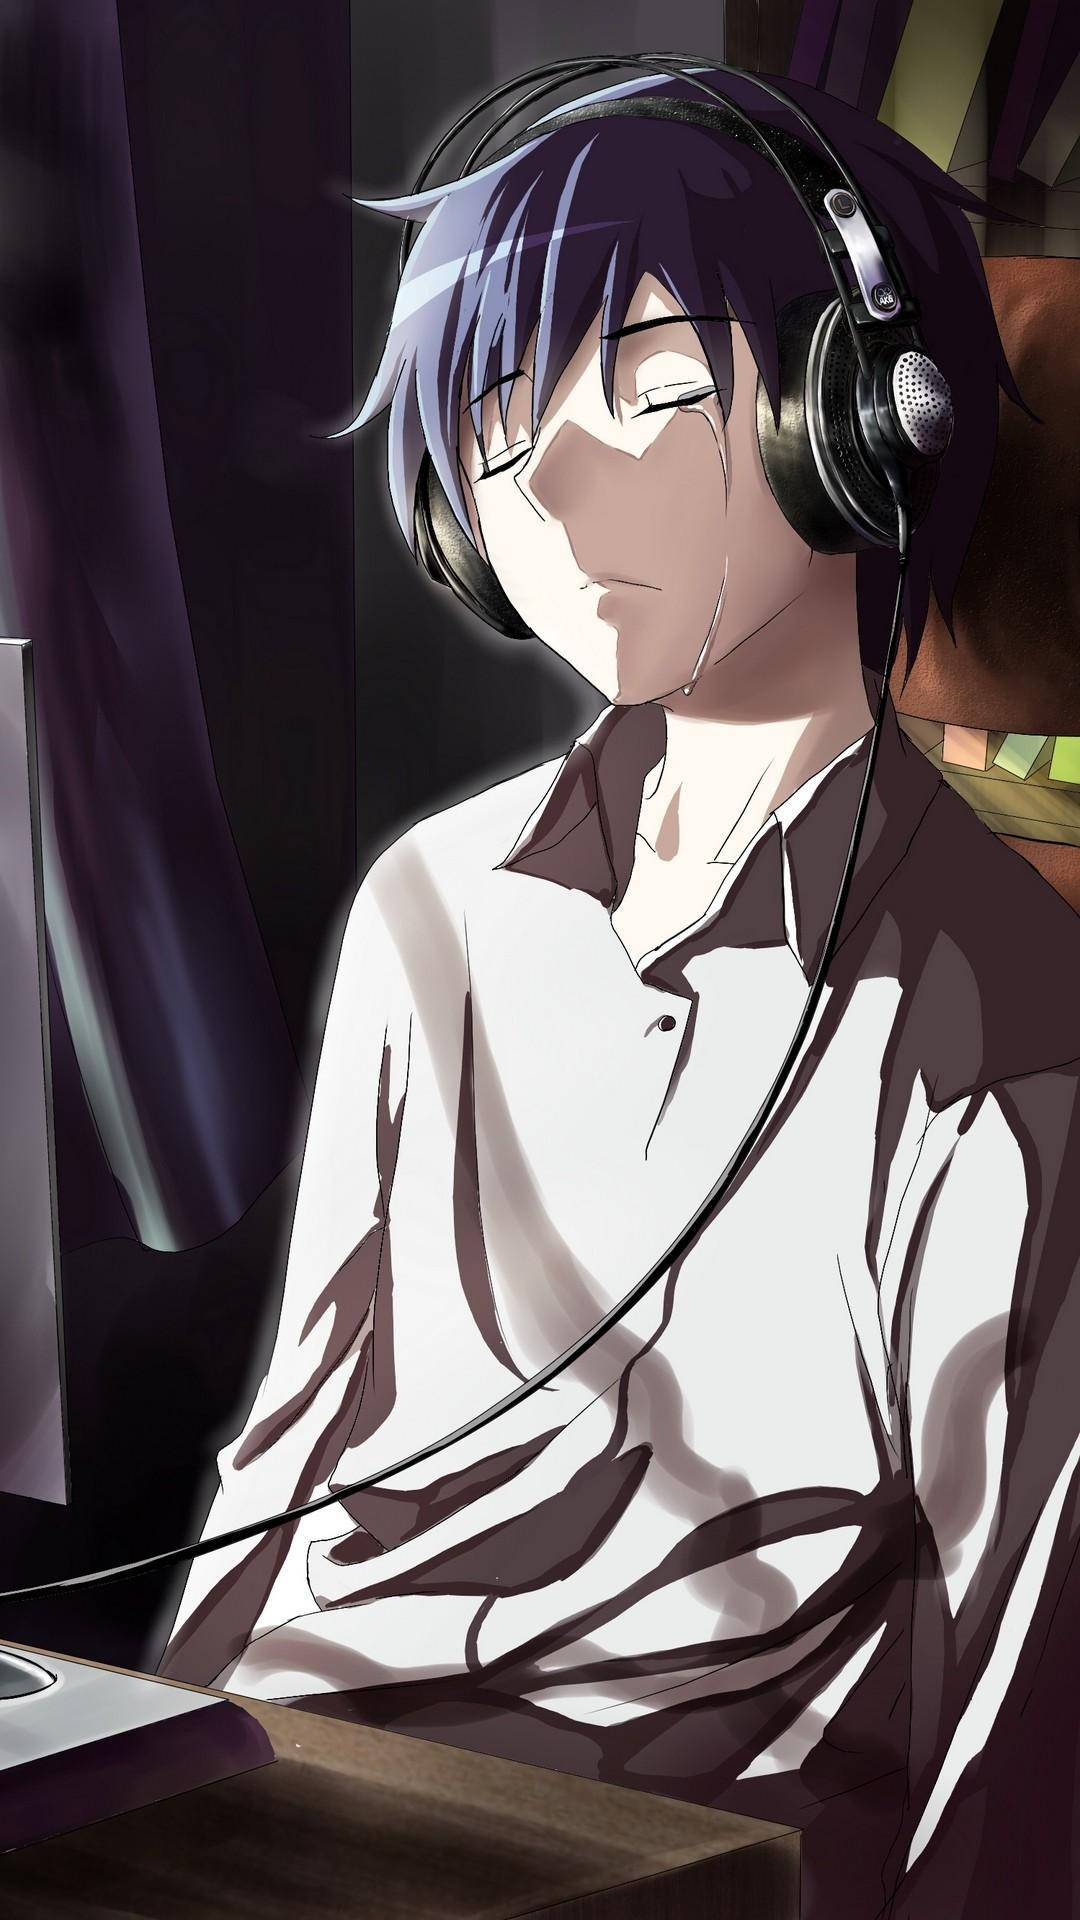 Sad Anime Boy With Headphones